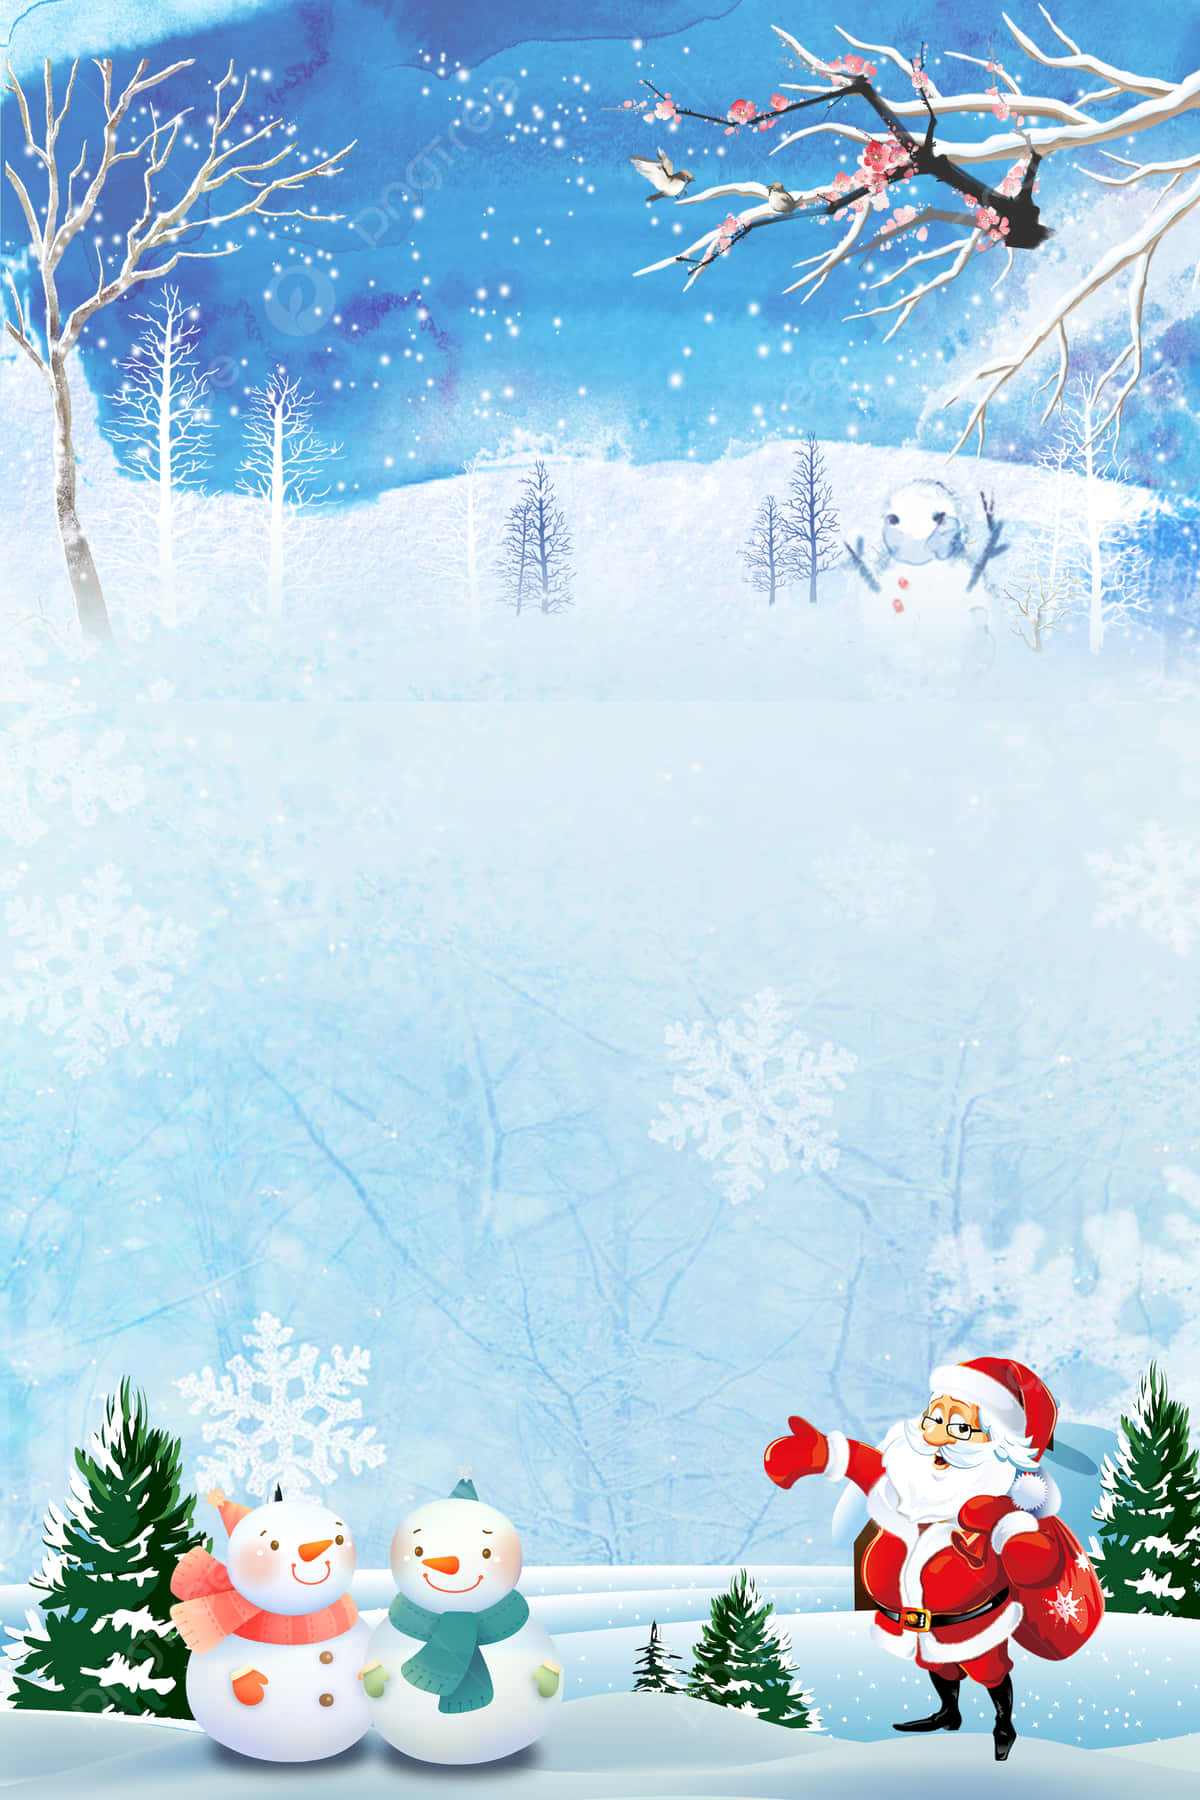 Snowmen Near Santa Claus Snow Christmas Digital Art Background